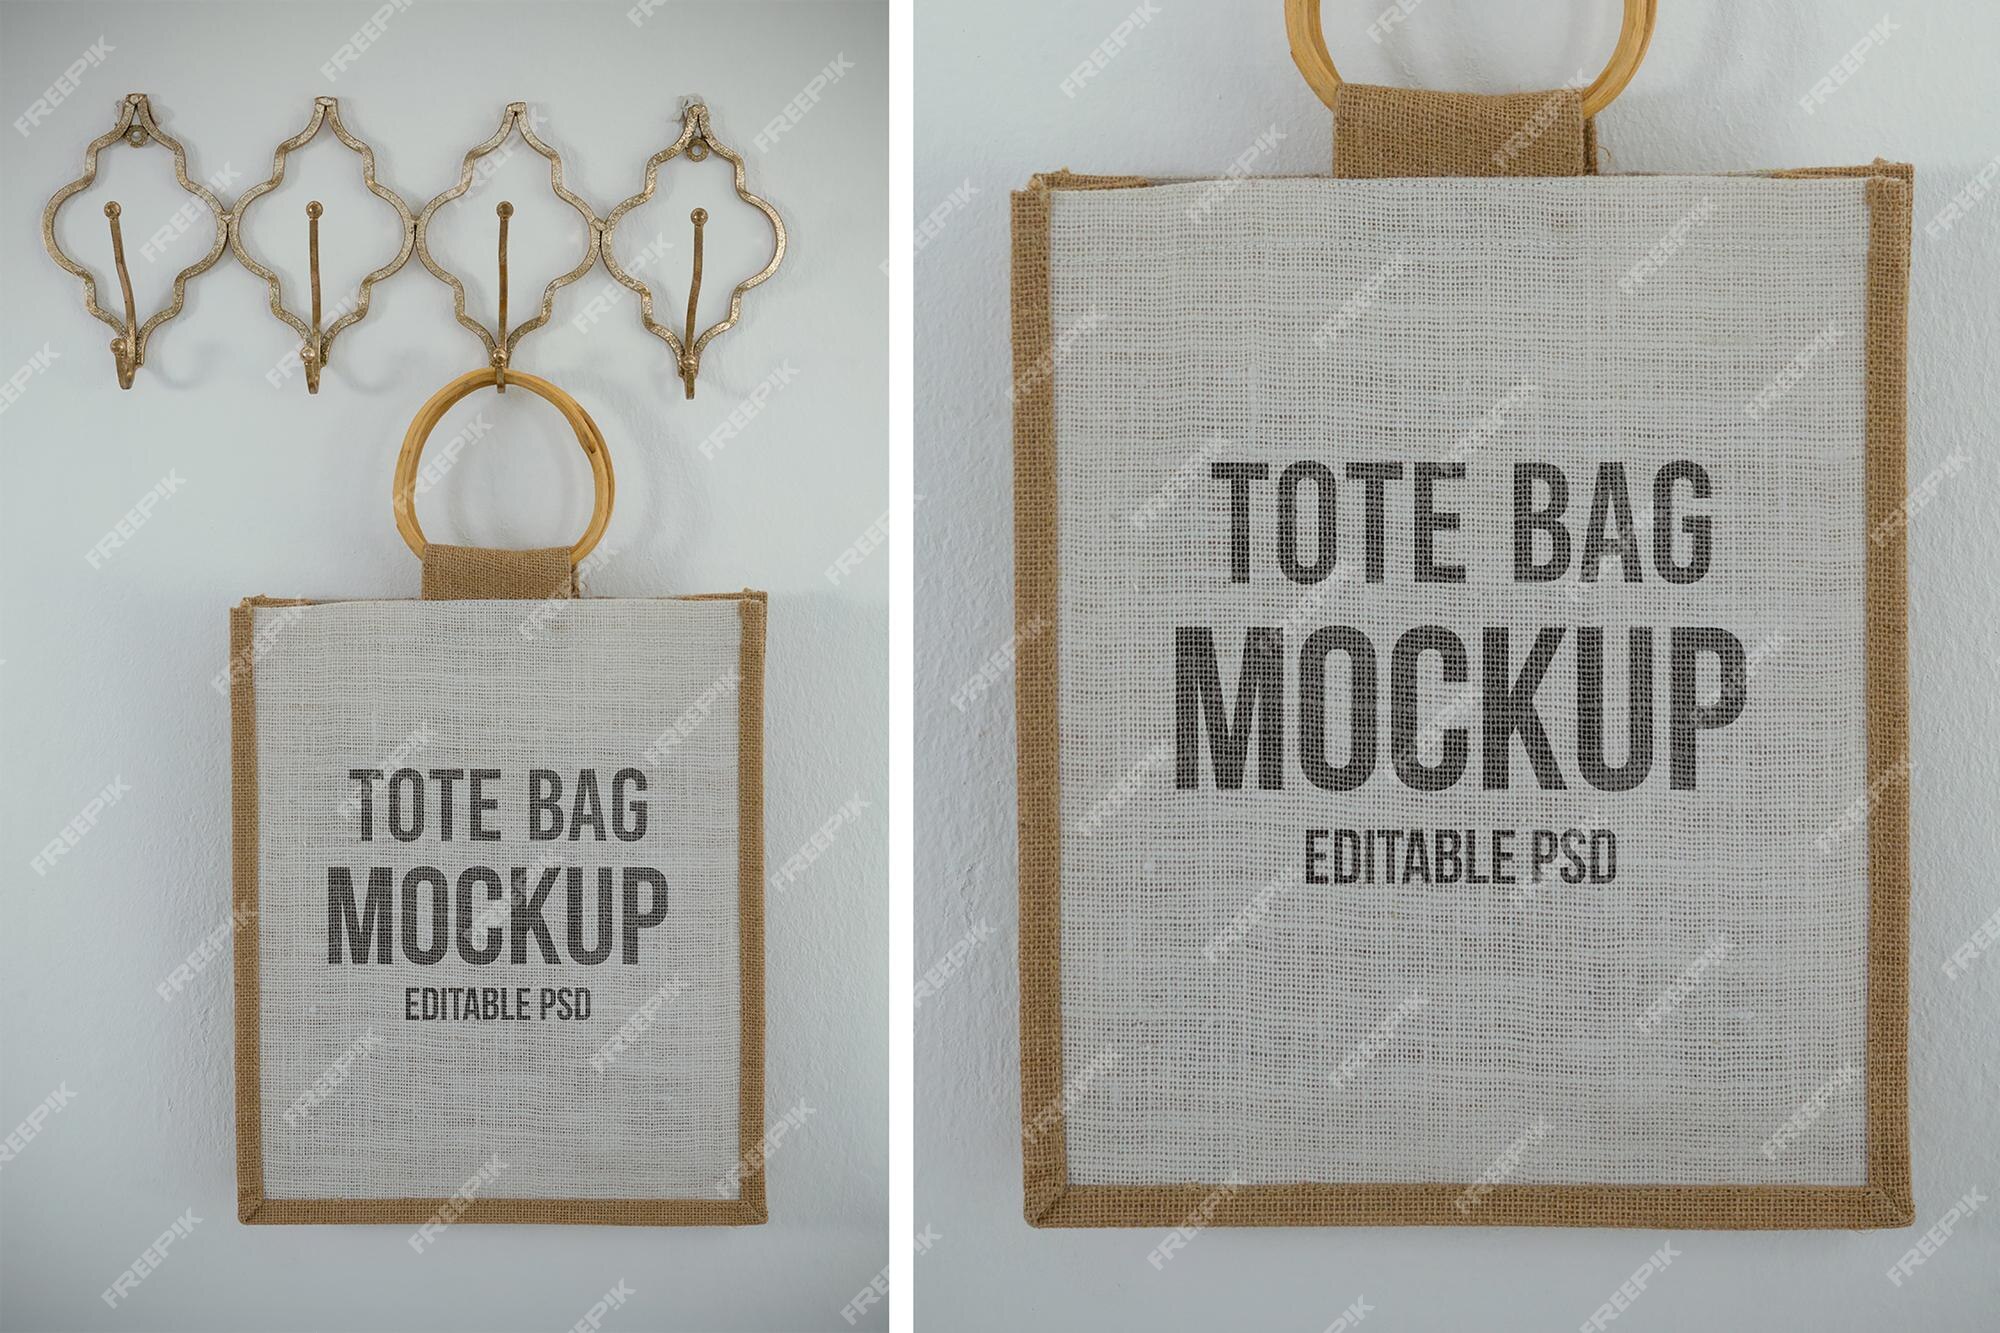 Free PSD | Tote bag photoshop mockup